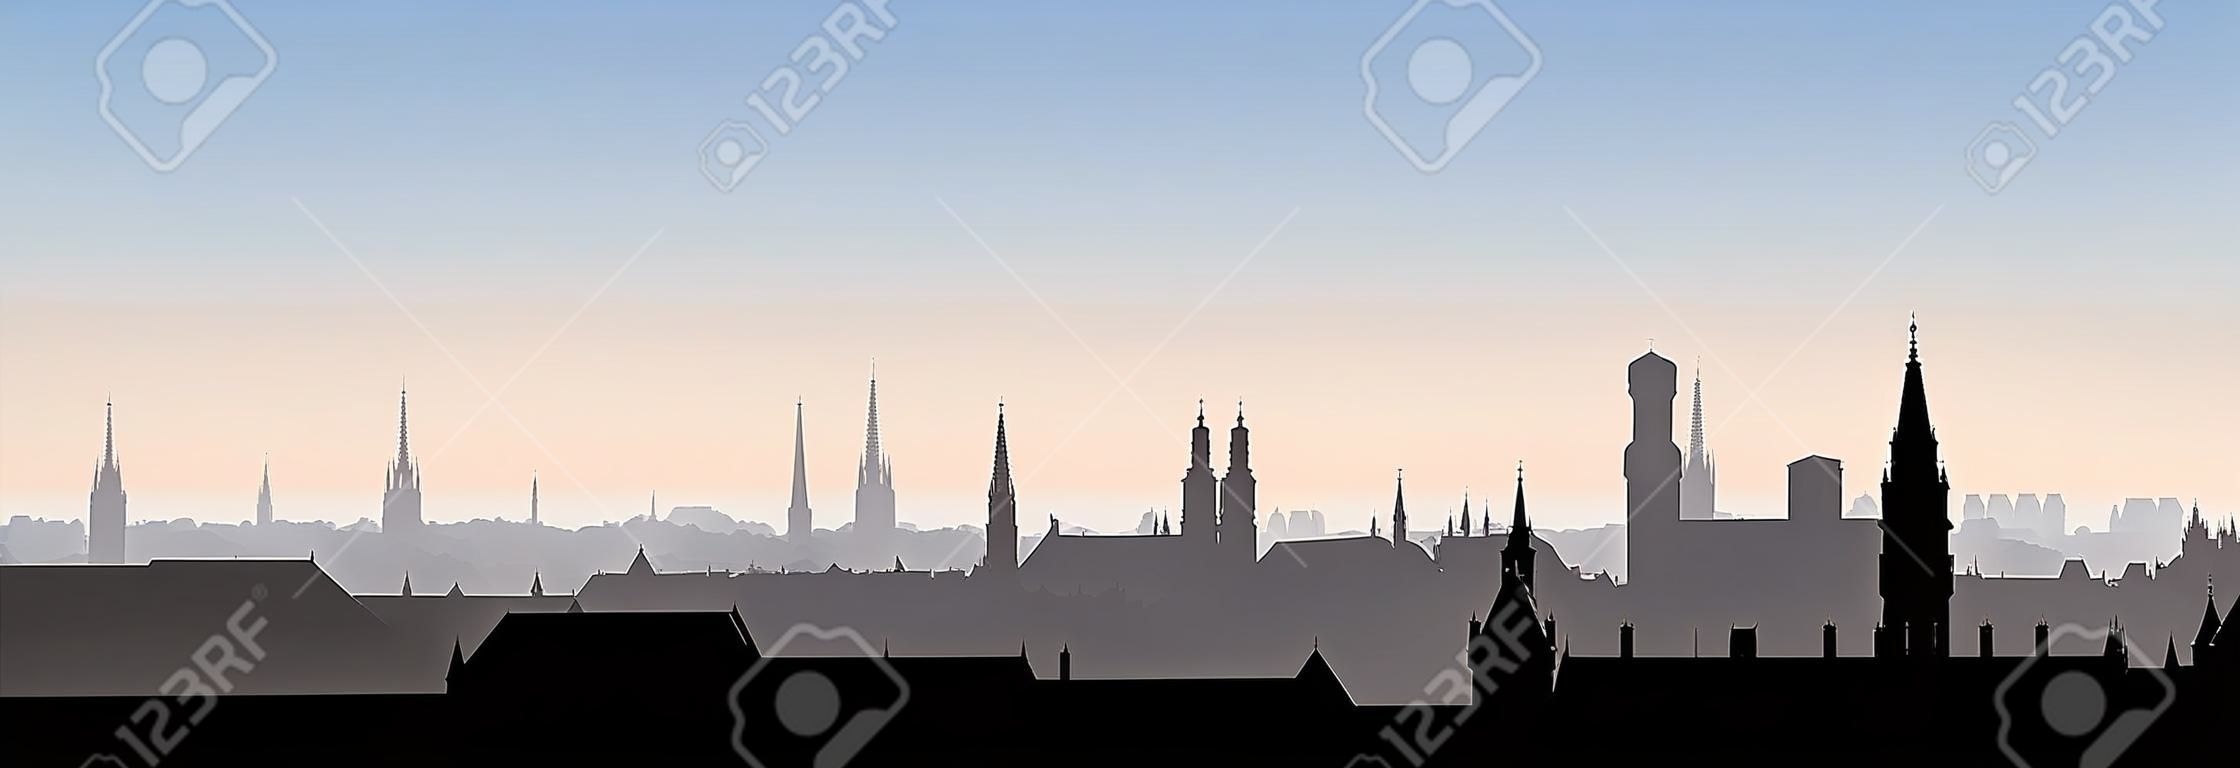 Munich city, Germany. Urban panoramic cityscape. Landmark buildings silhouette skyline. Travel Bavaria background